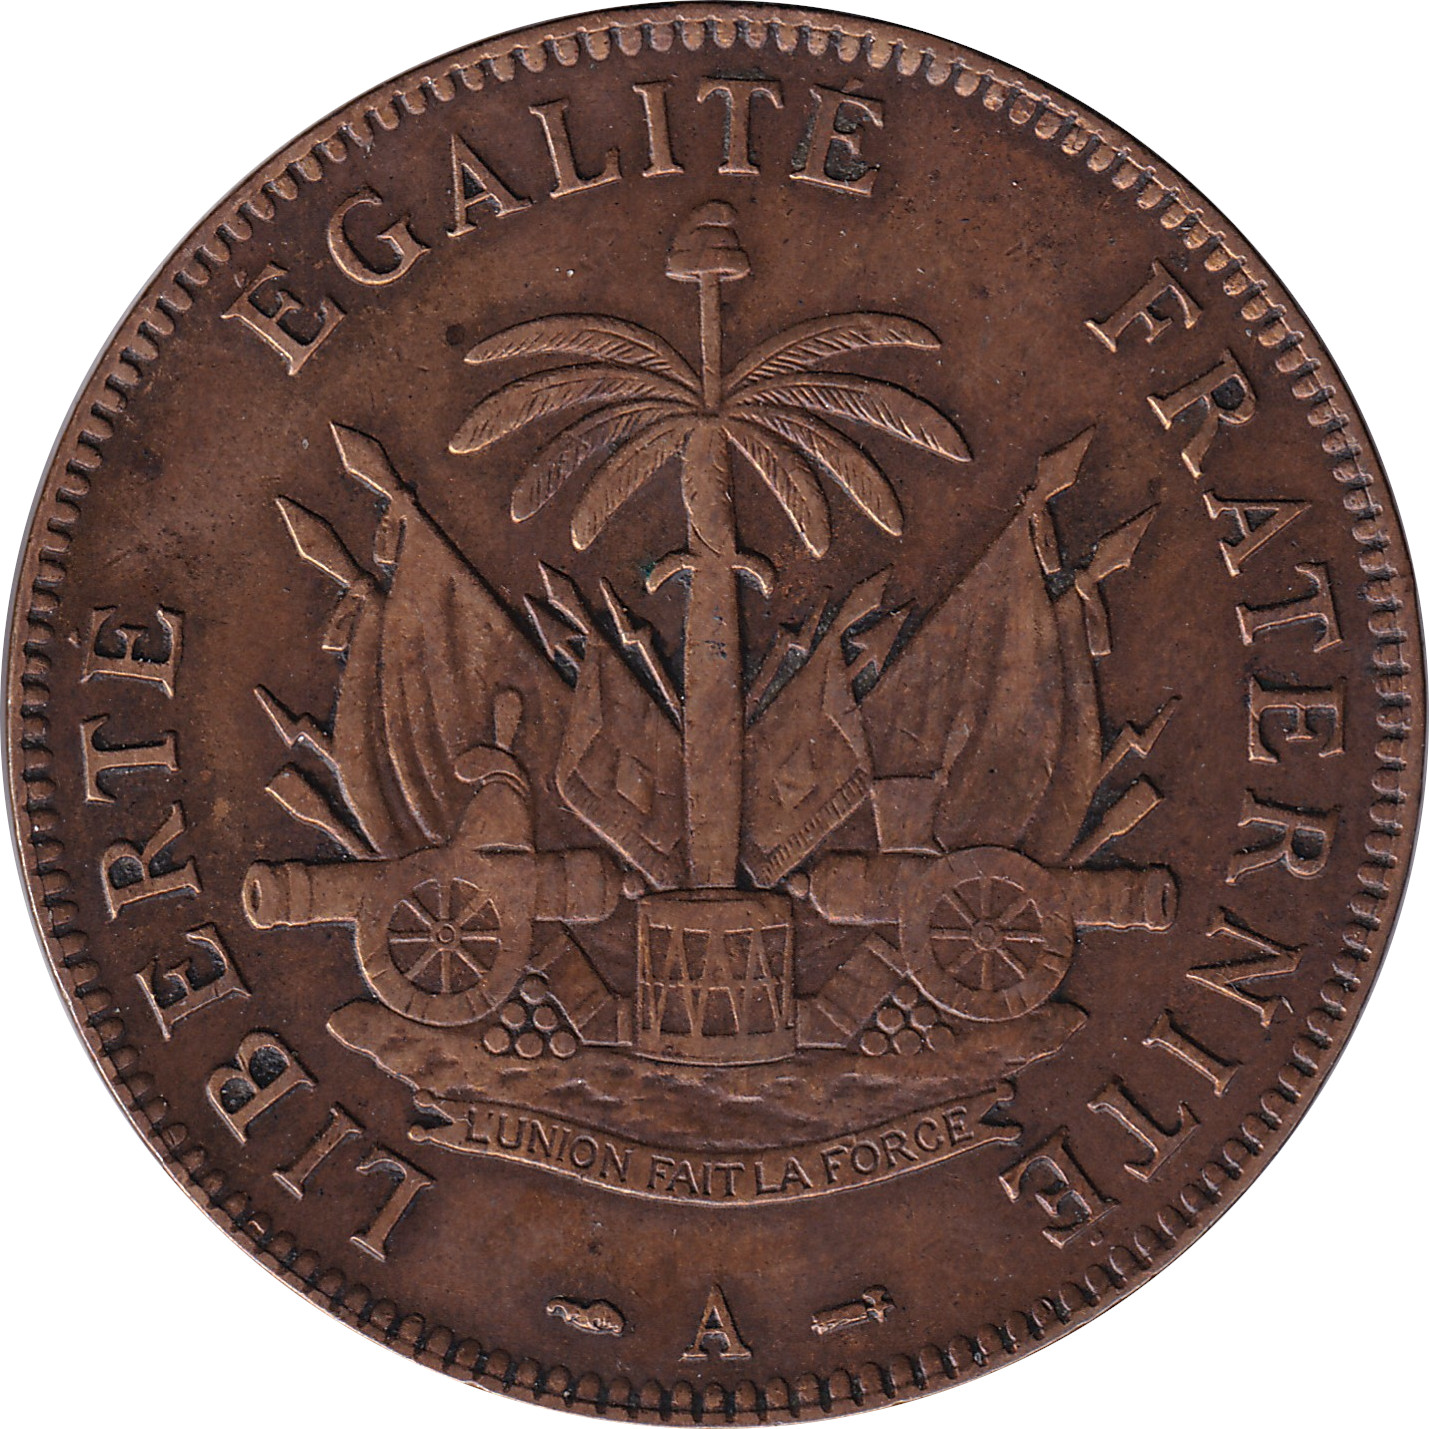 2 centimes - Armoiries